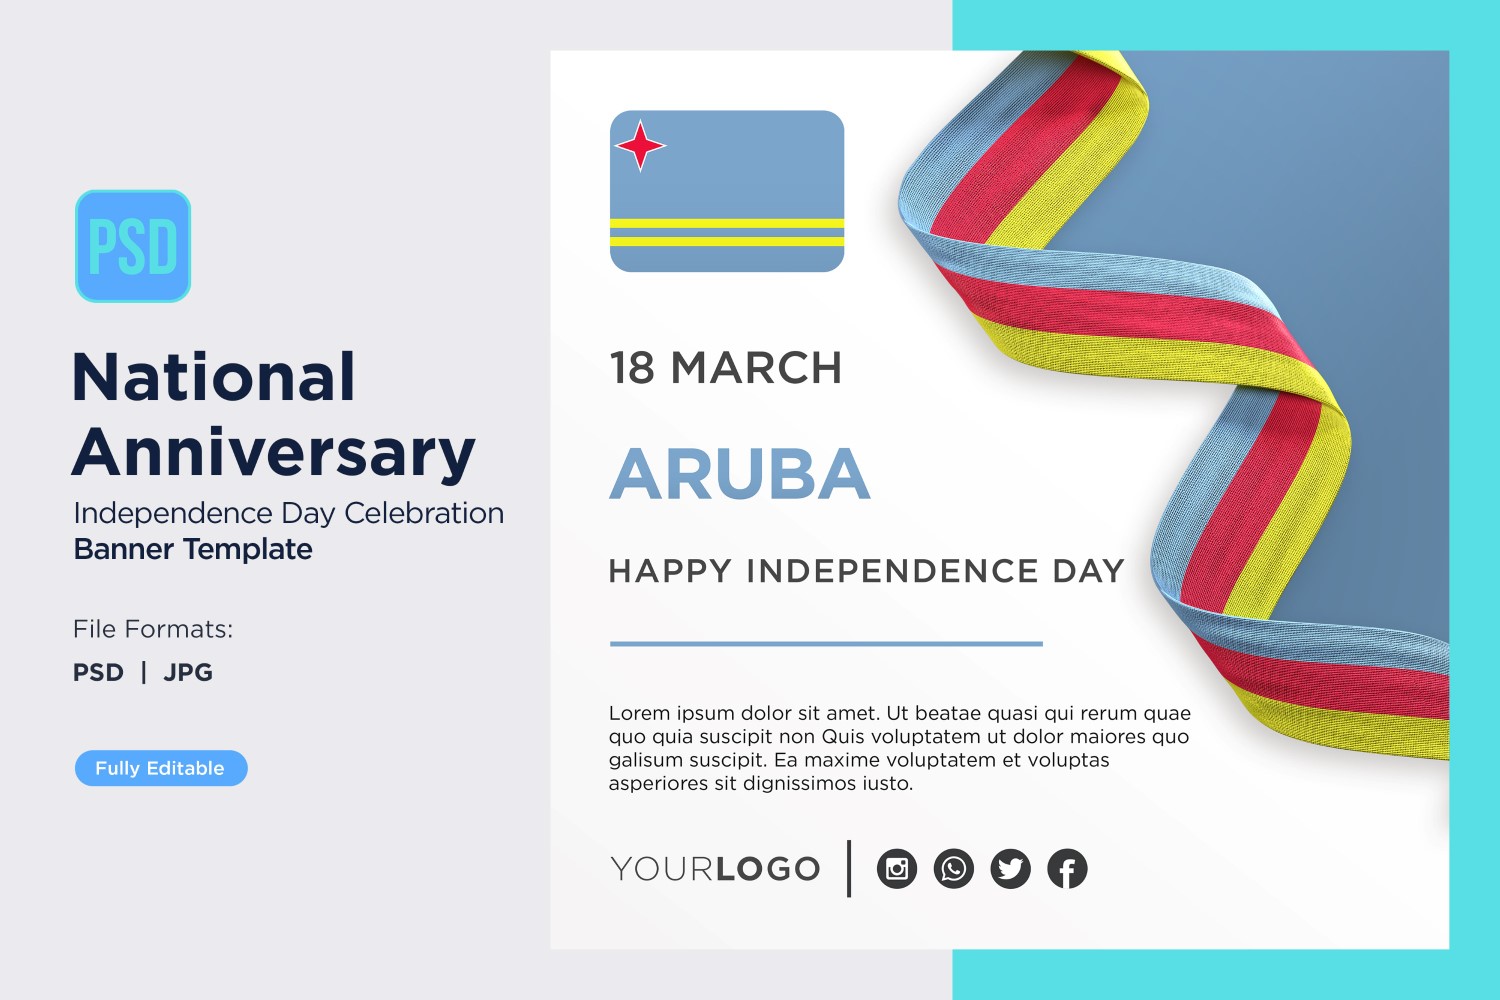 Aruba National Independence Day Celebration Banner